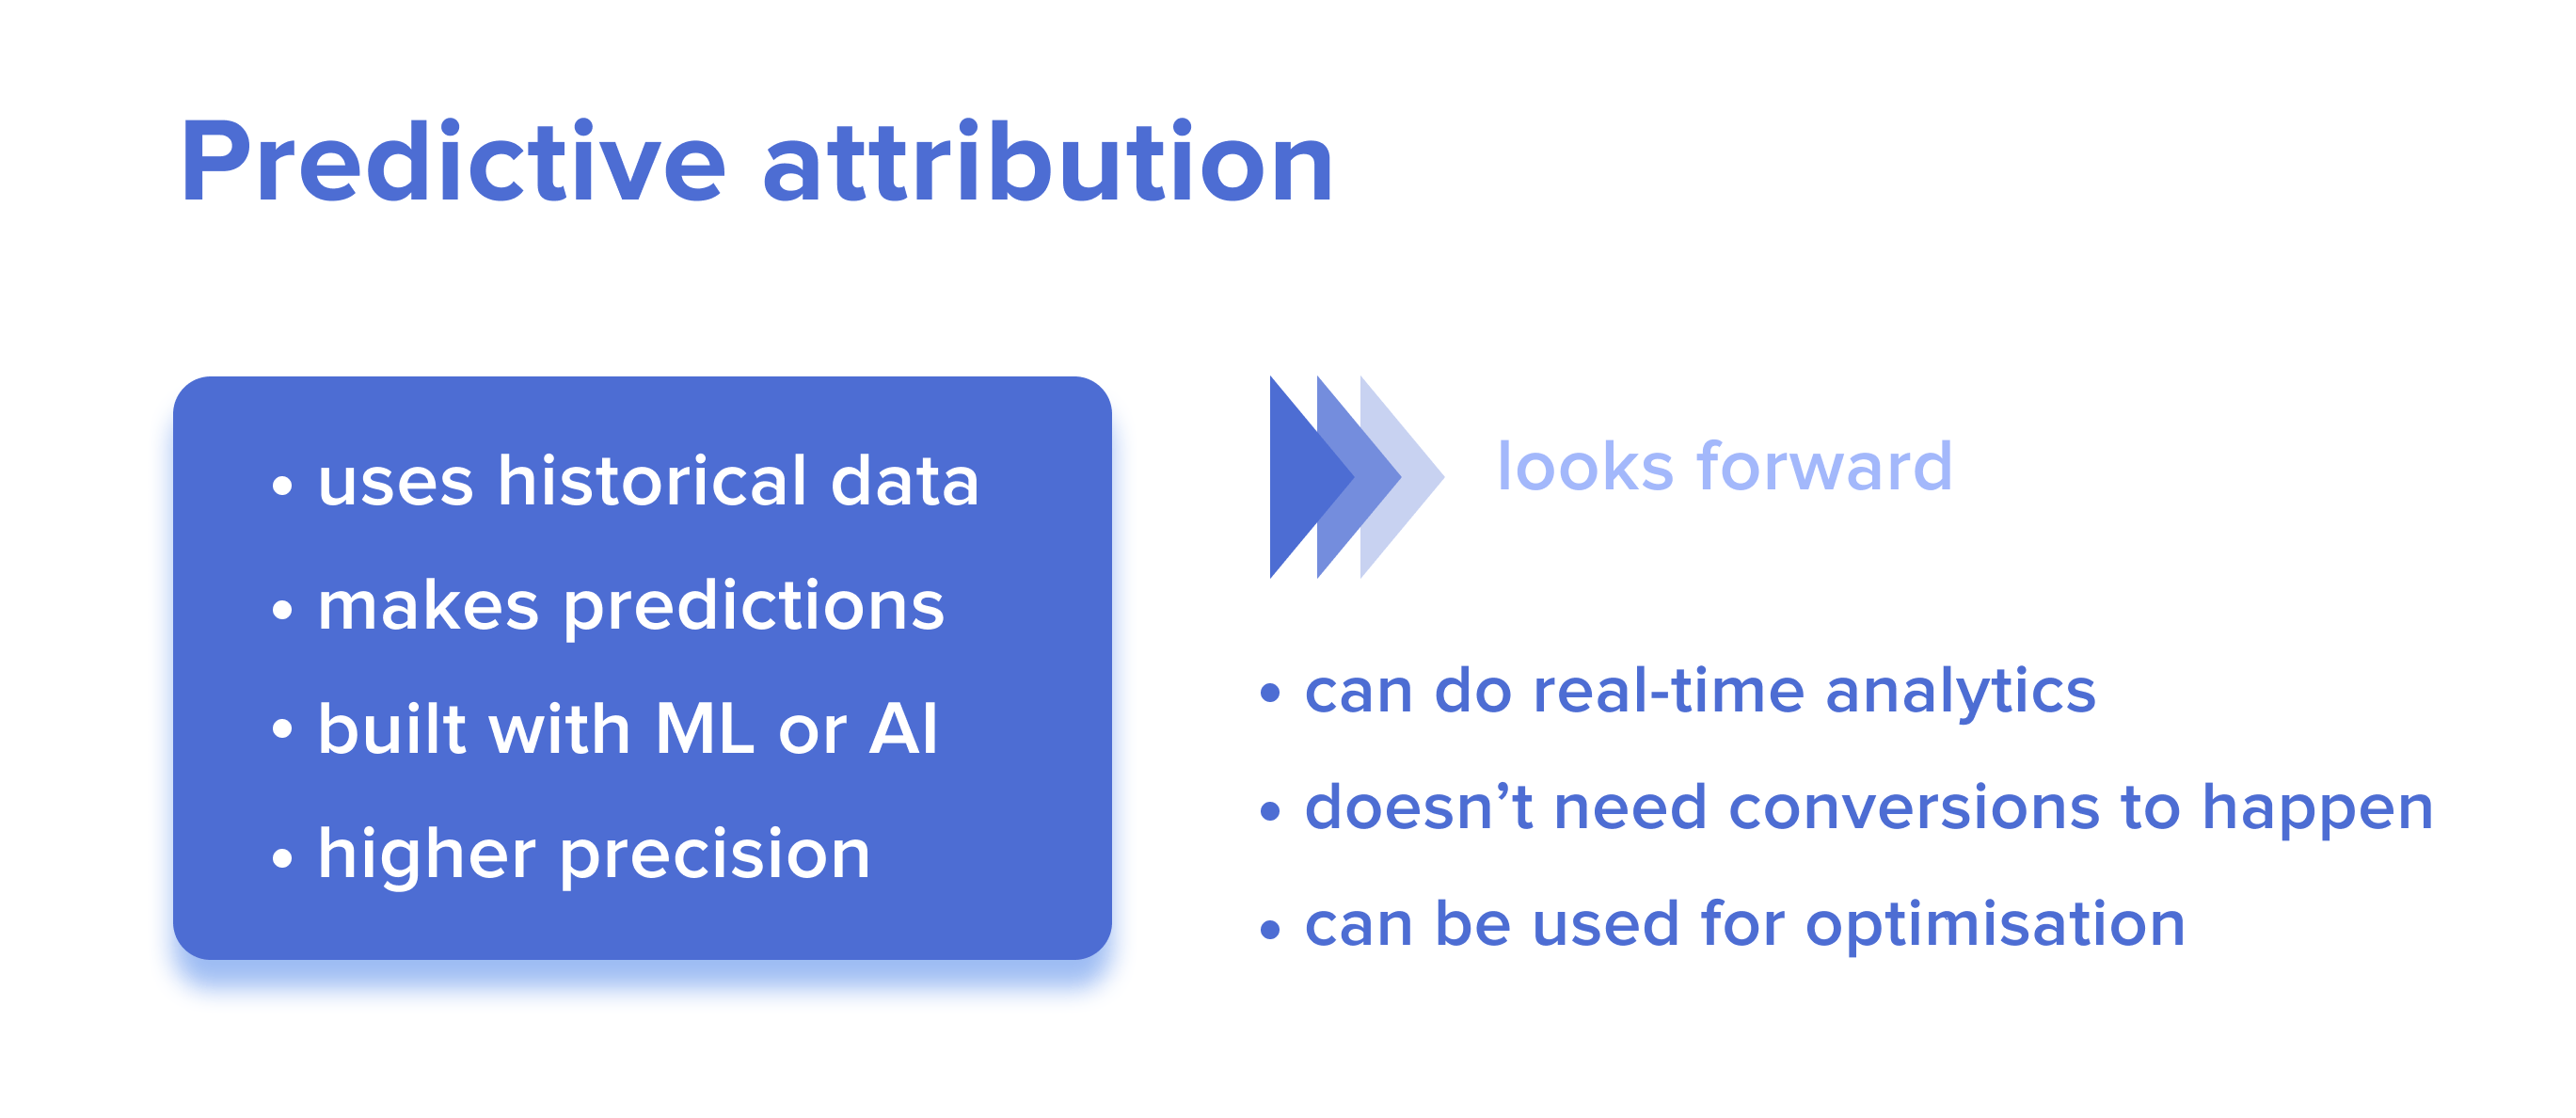 Predictive attribution models